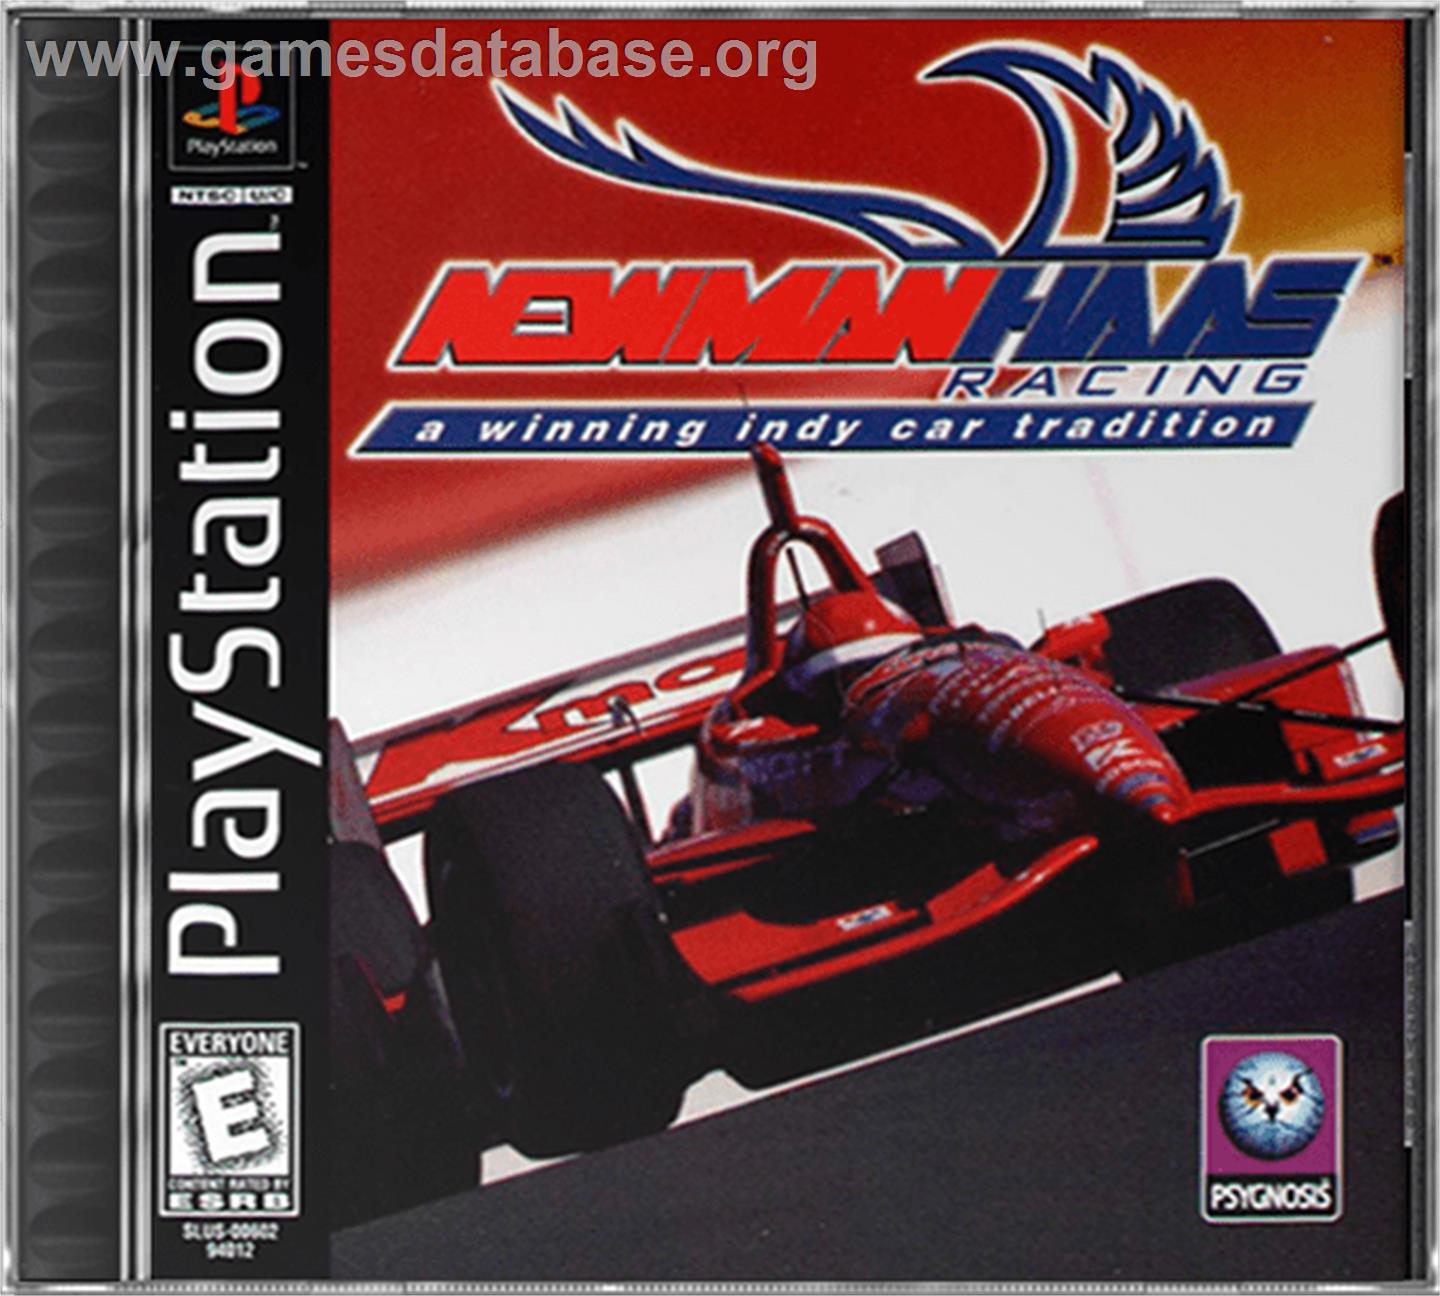 Newman Haas Racing - Sony Playstation - Artwork - Box